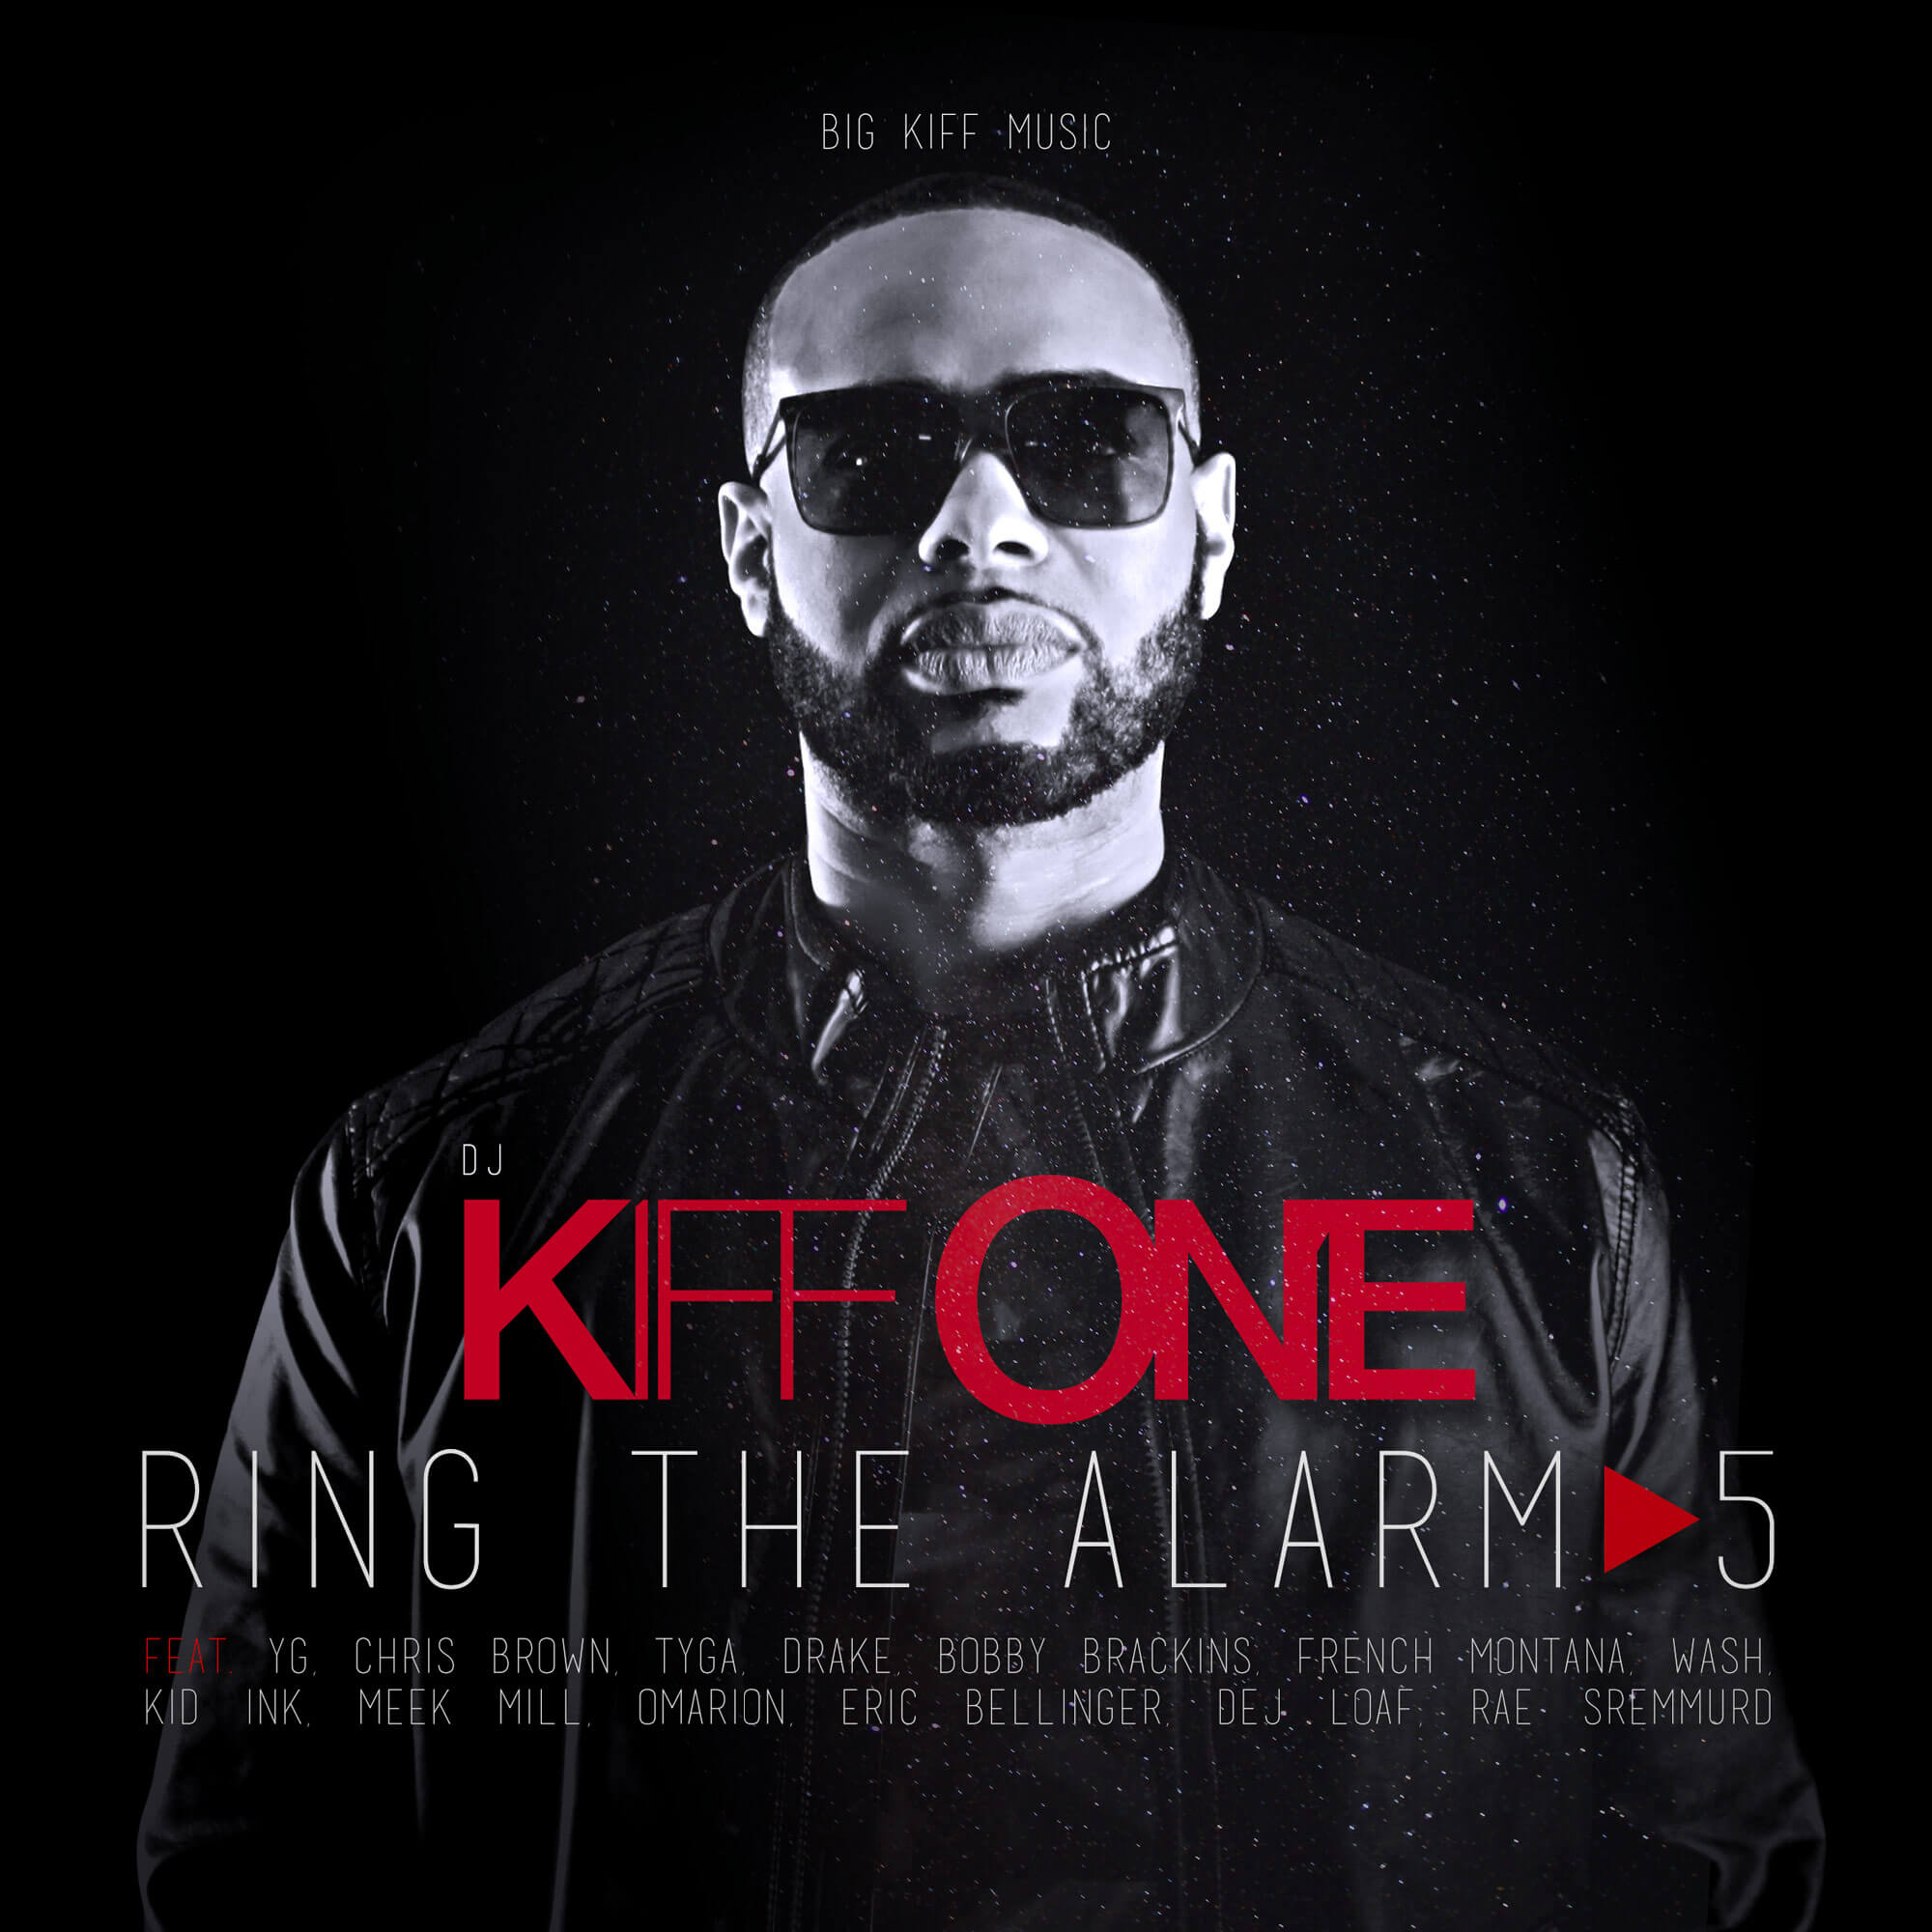 Ring The Alarm vol. 05